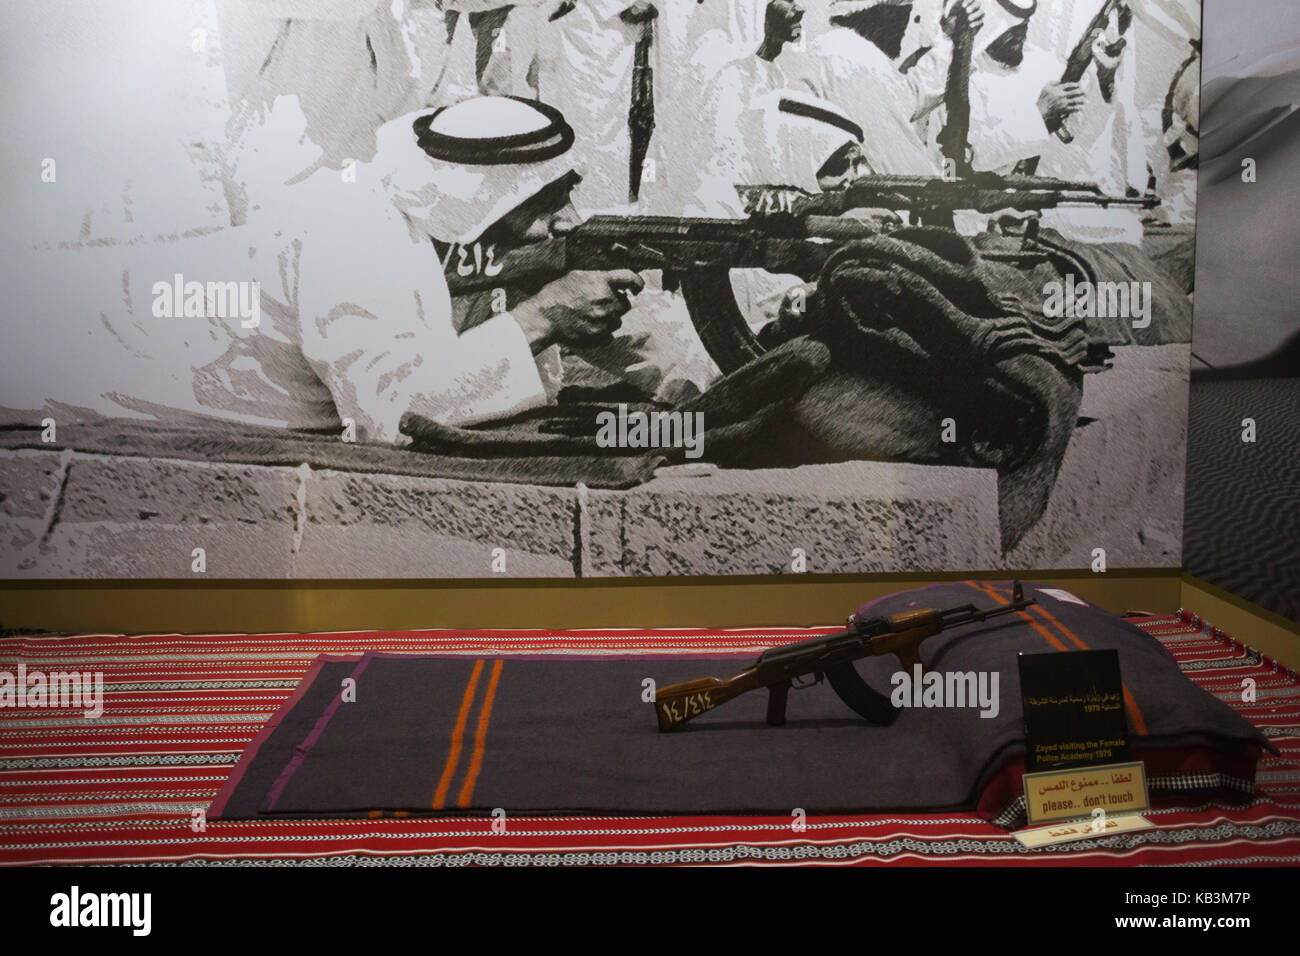 UAE, Abu Dhabi, Sheikh Zayed Research Center, photo of Sheikh Zayed bin Sultan with AK-47 rifle Stock Photo